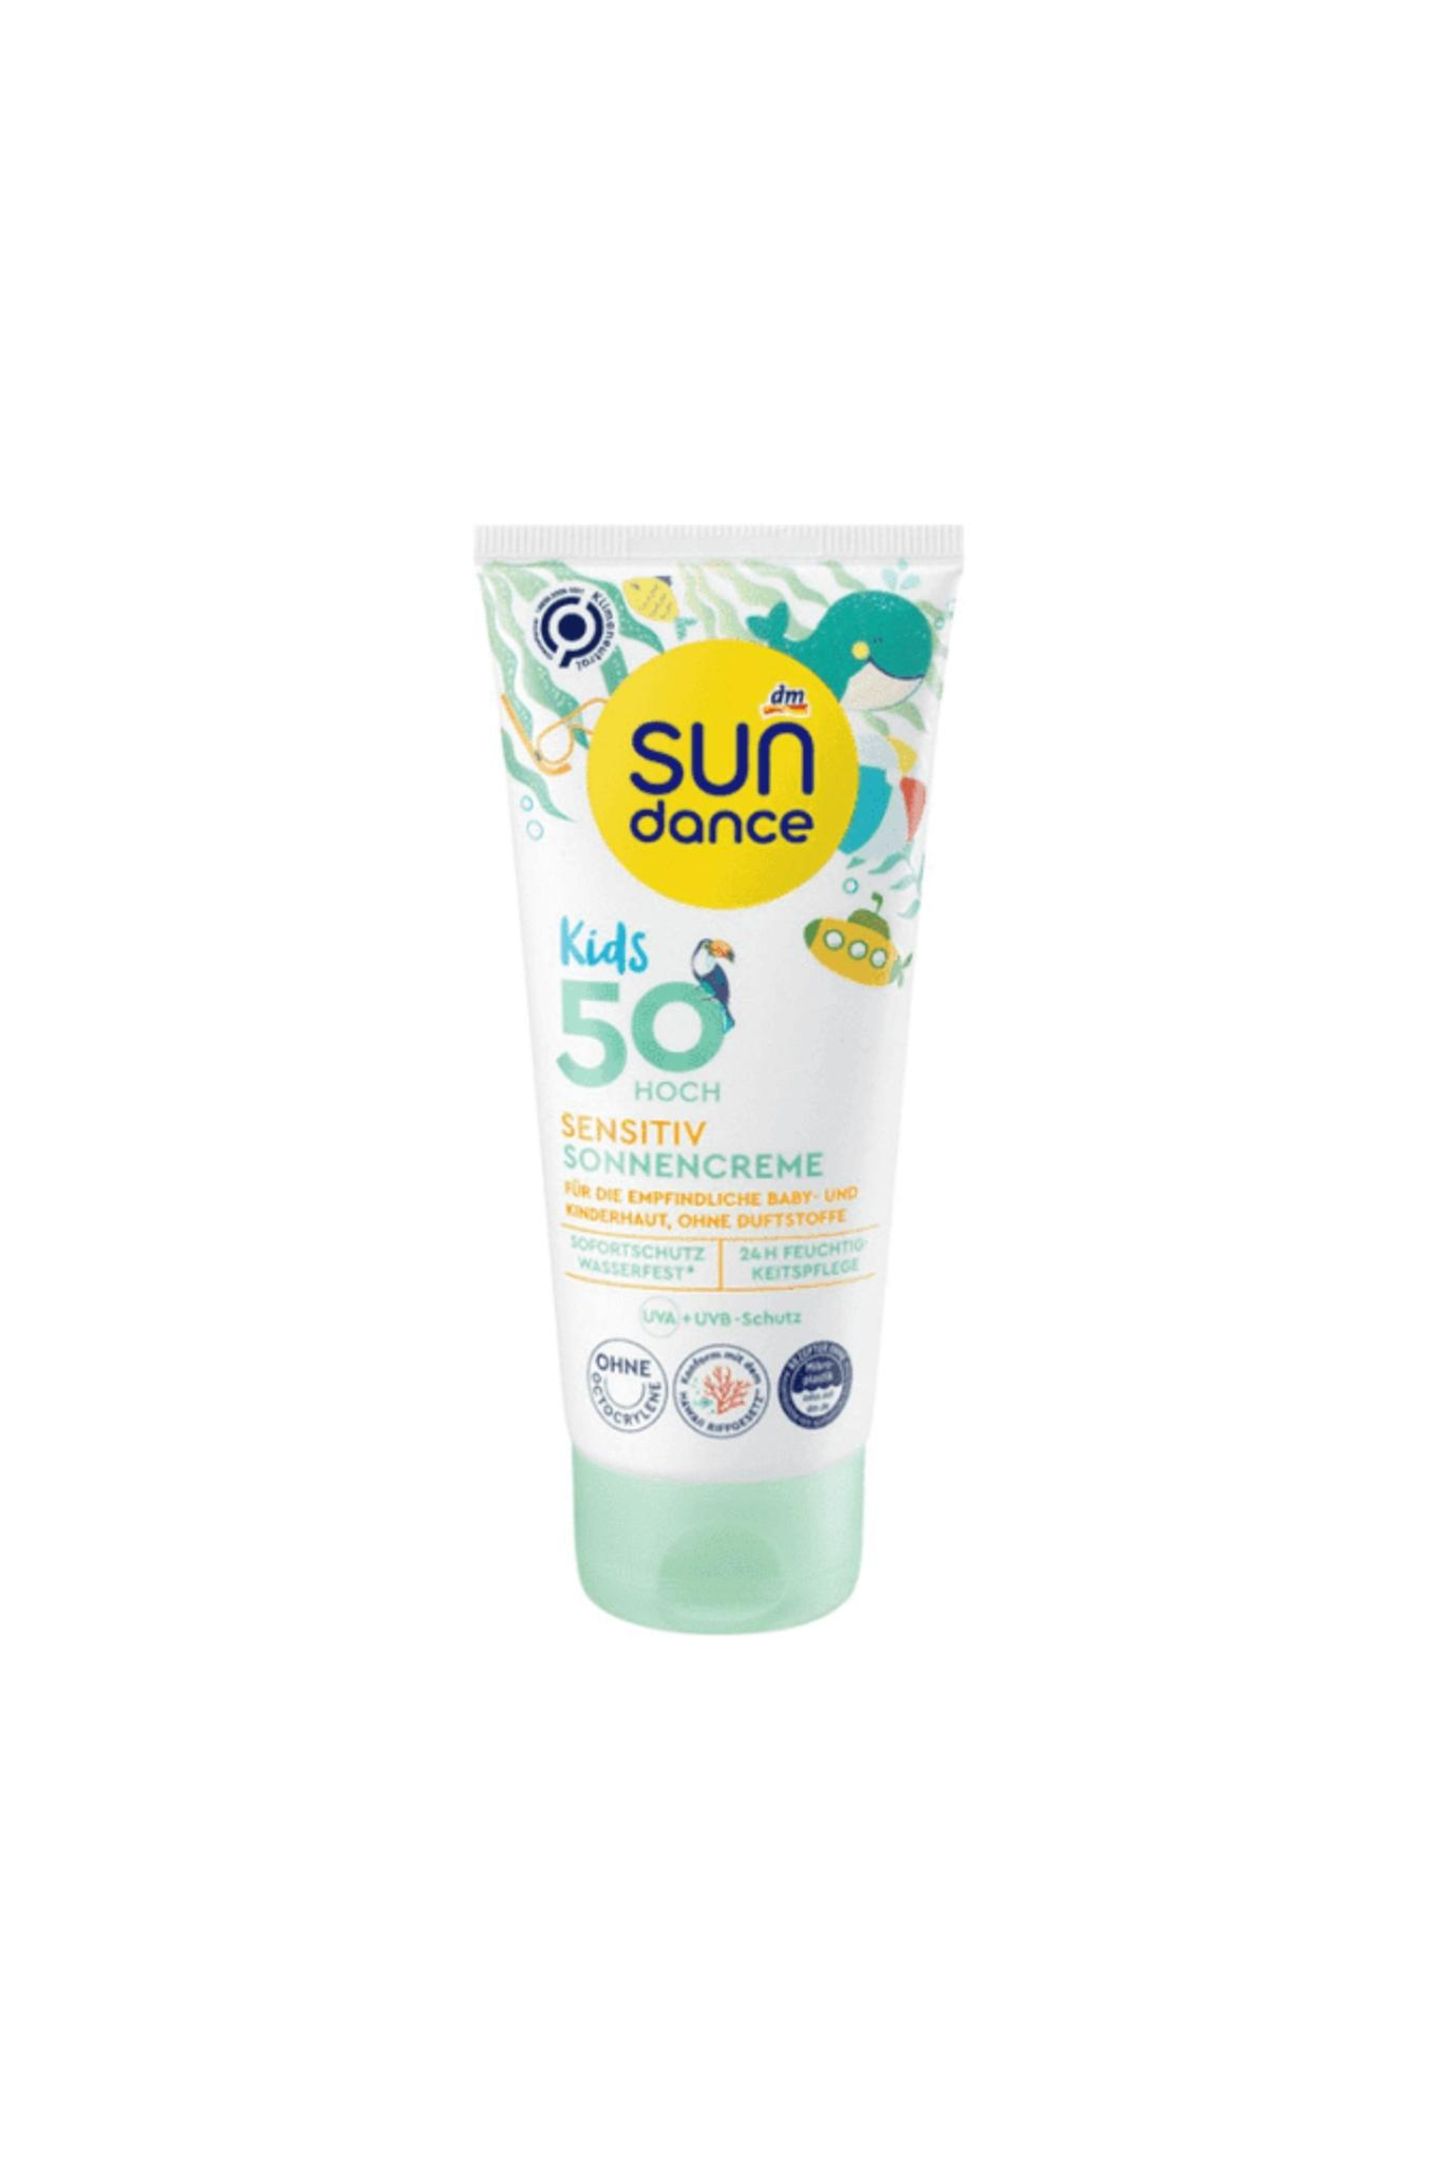 Sonnenschutz Gesicht: Sun Dance Kids 50 sensitiv sonnencreme